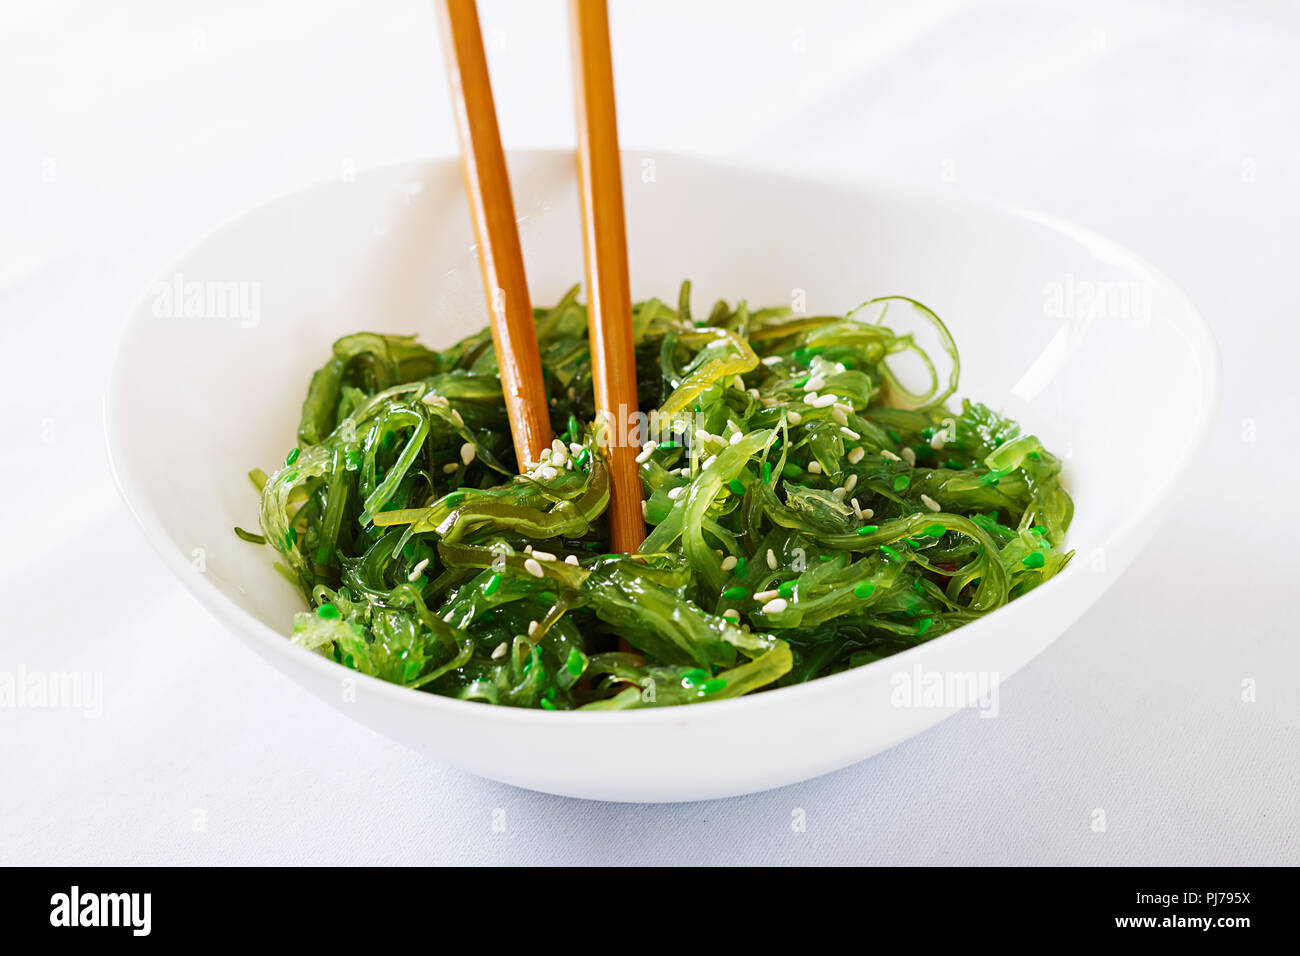 Wakame Chuka Or Seaweed Salad With Sesame Seeds In Bowl On White